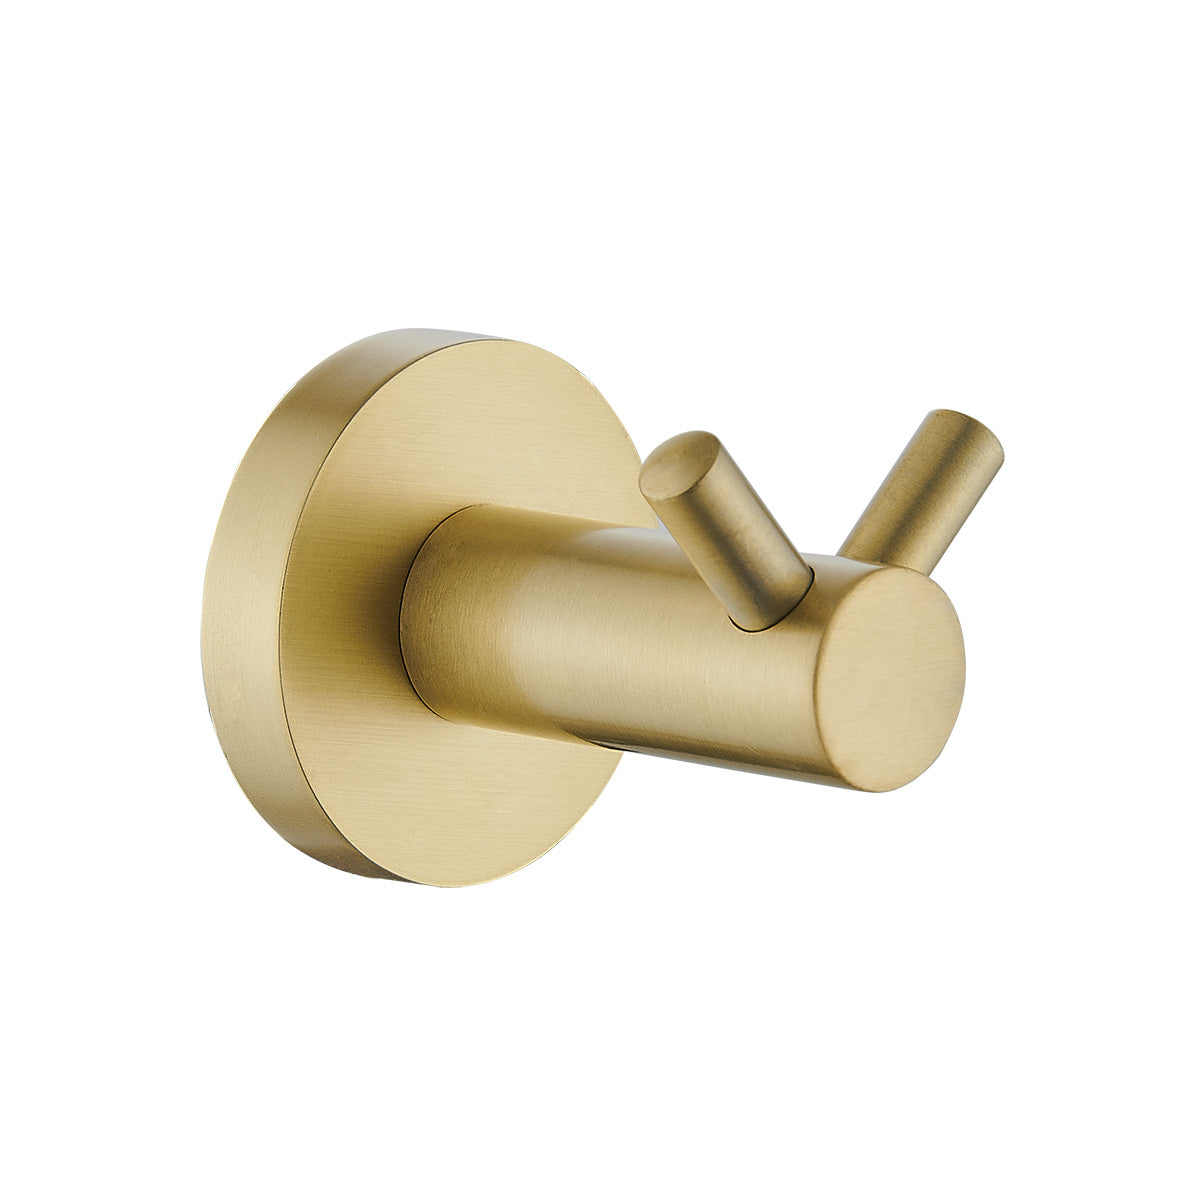 BA854 (BG) / Ideal Double Robe Hook (Brushed Gold) - Hellycar Brushed Gold Double Robe Hook For Bathroom